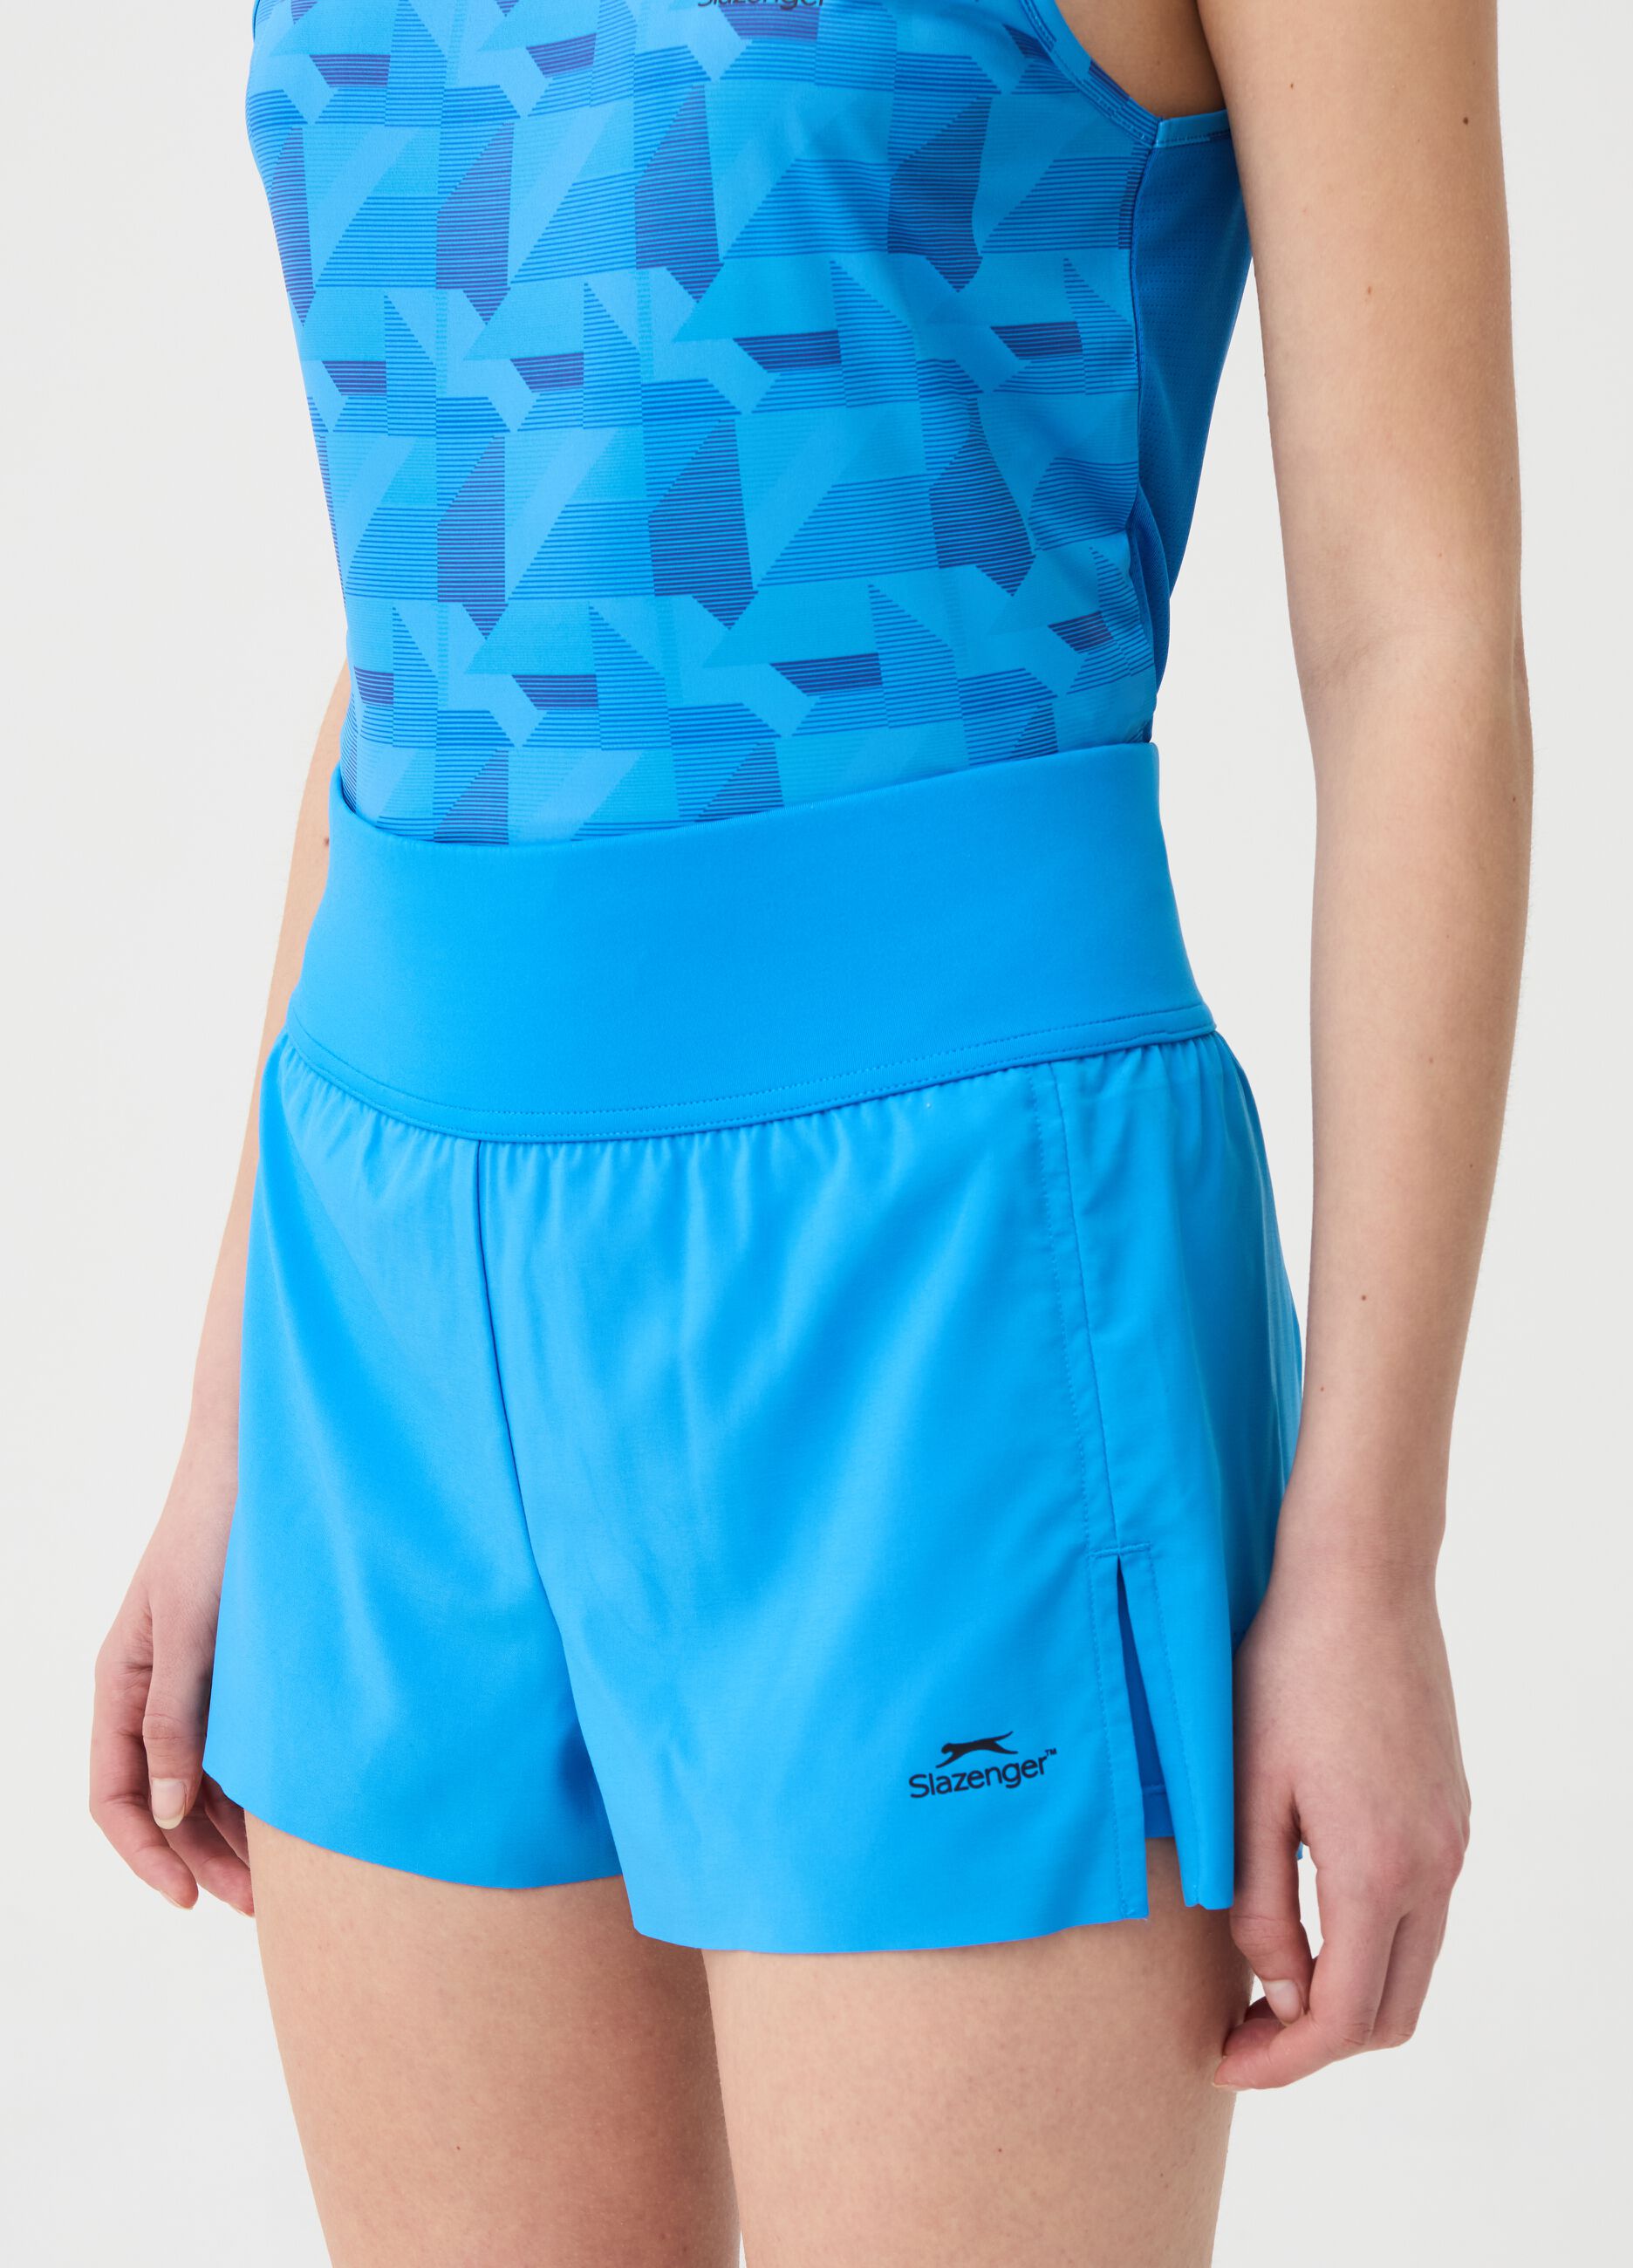 Slazenger quick-dry tennis shorts